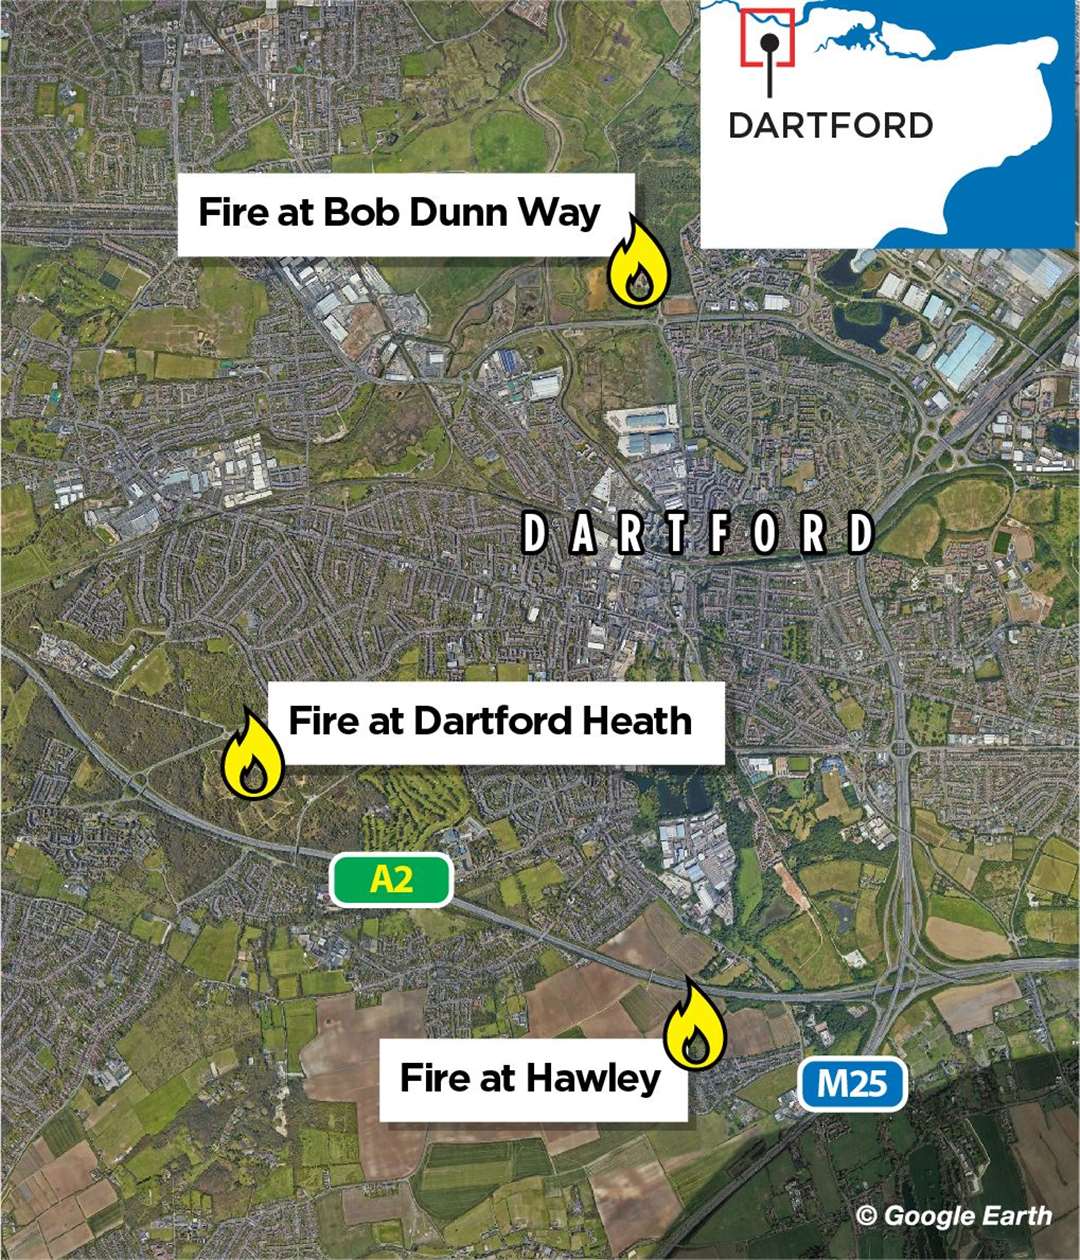 Fire crews have been battling three fires in Dartford at Bob Dunn Way, Hawley and Dartford Heath